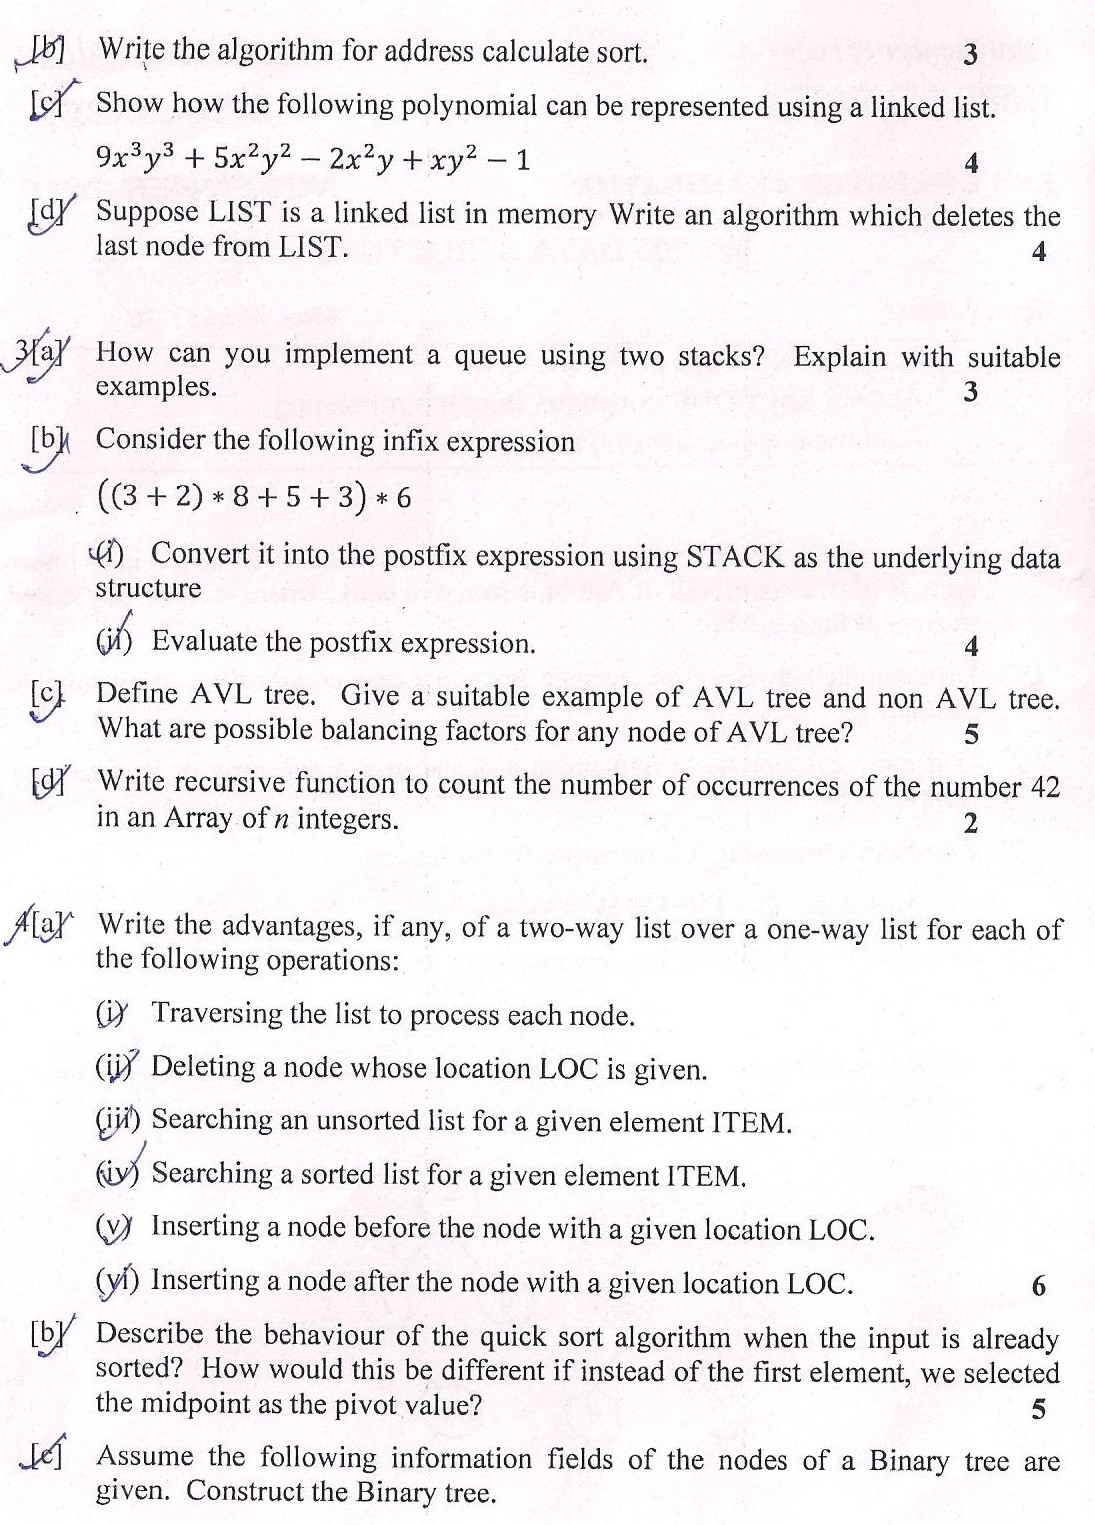 DTU Question Papers 2010  3 Semester - End Sem - SW-203